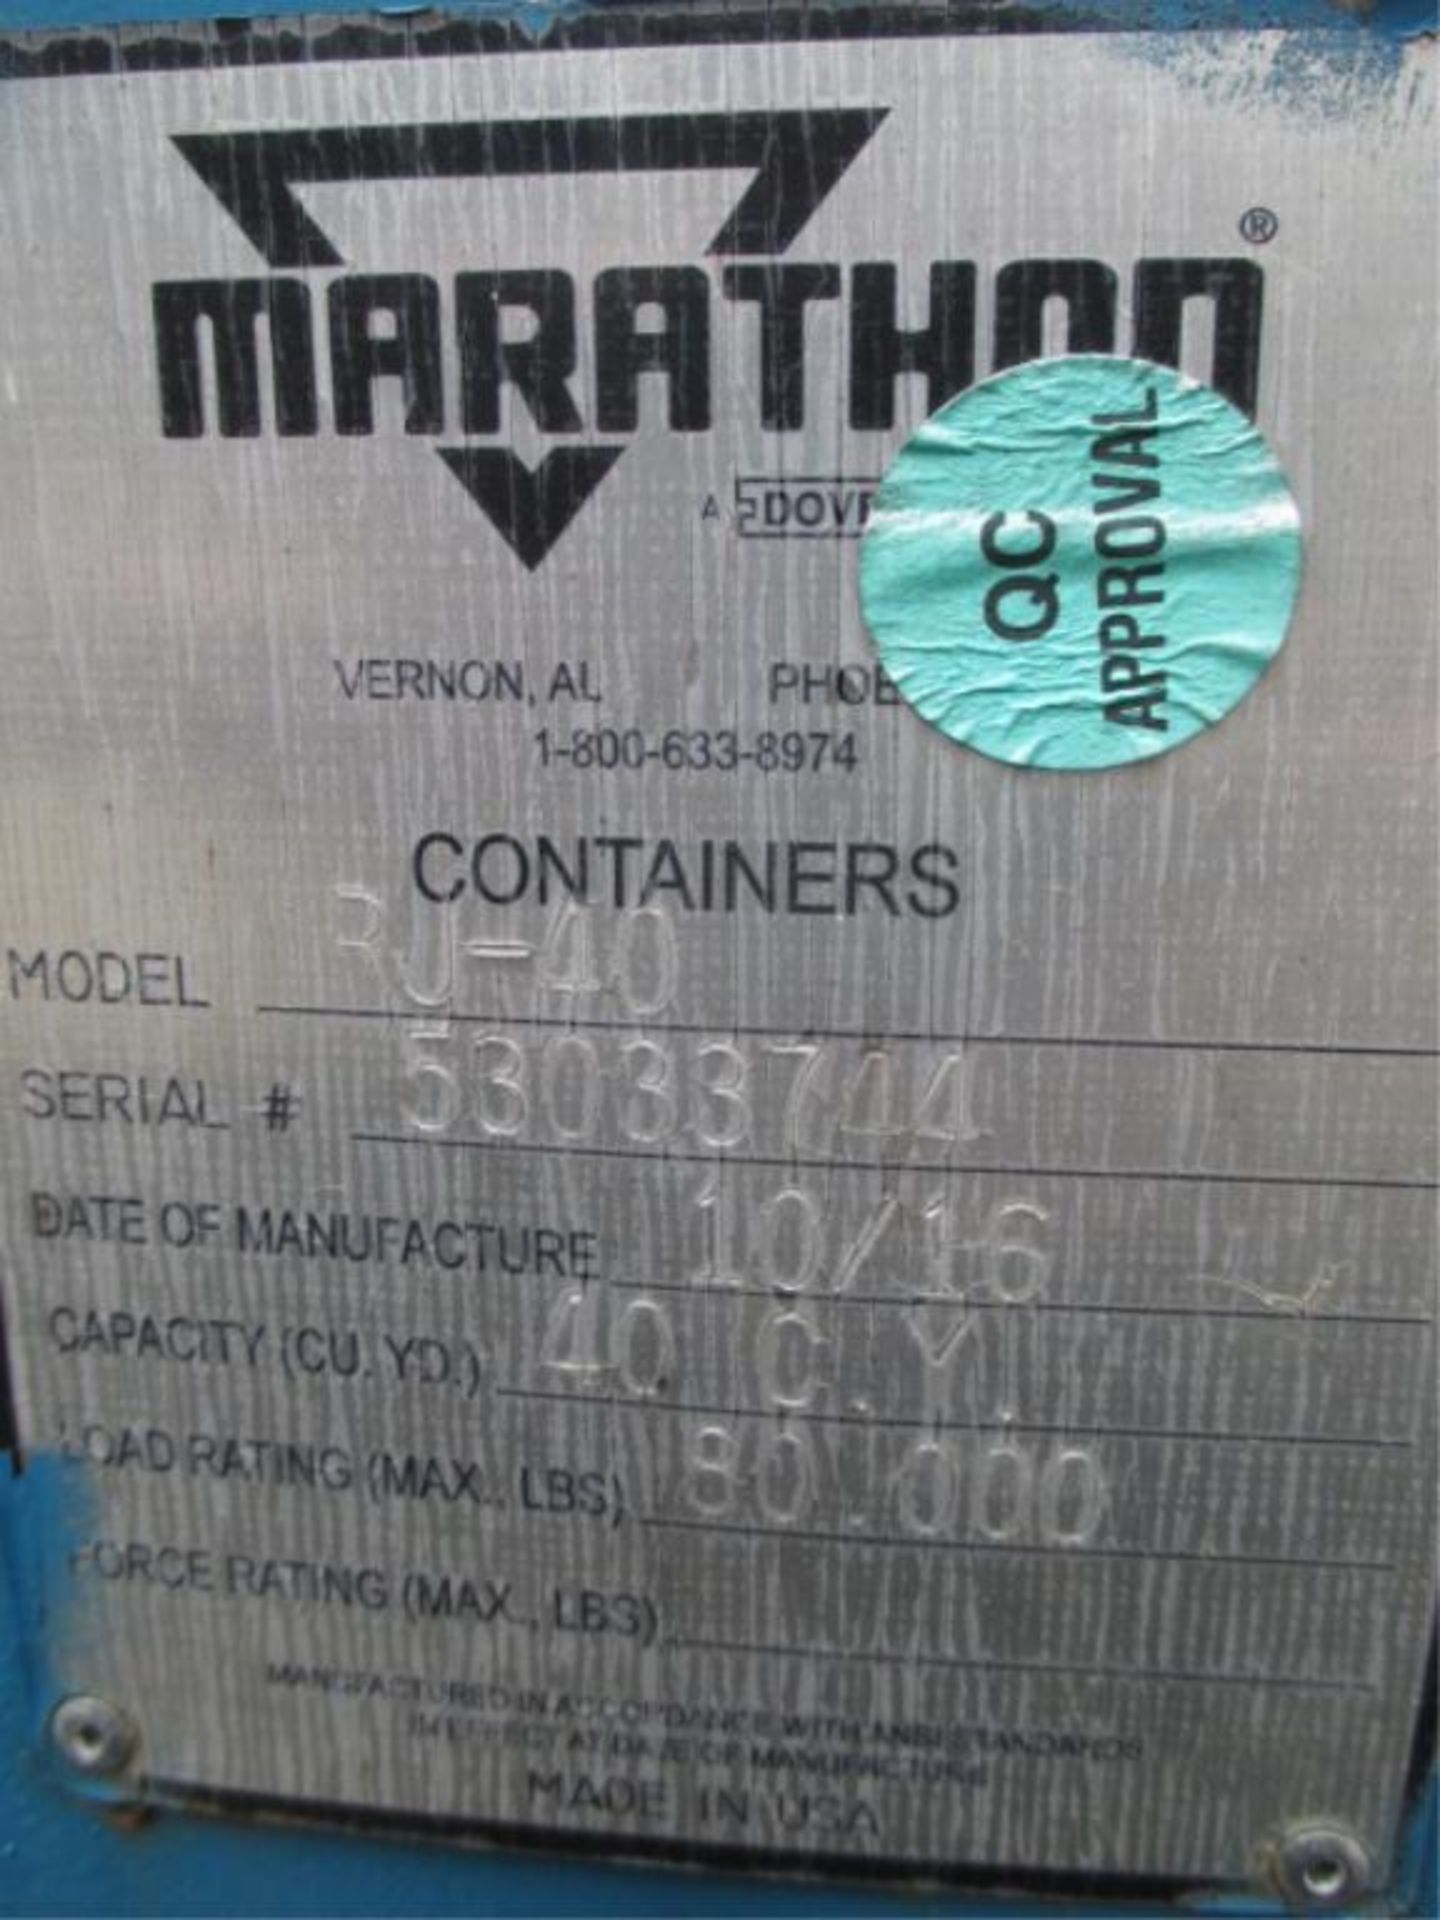 Marathon Trash Compactor - Image 8 of 8